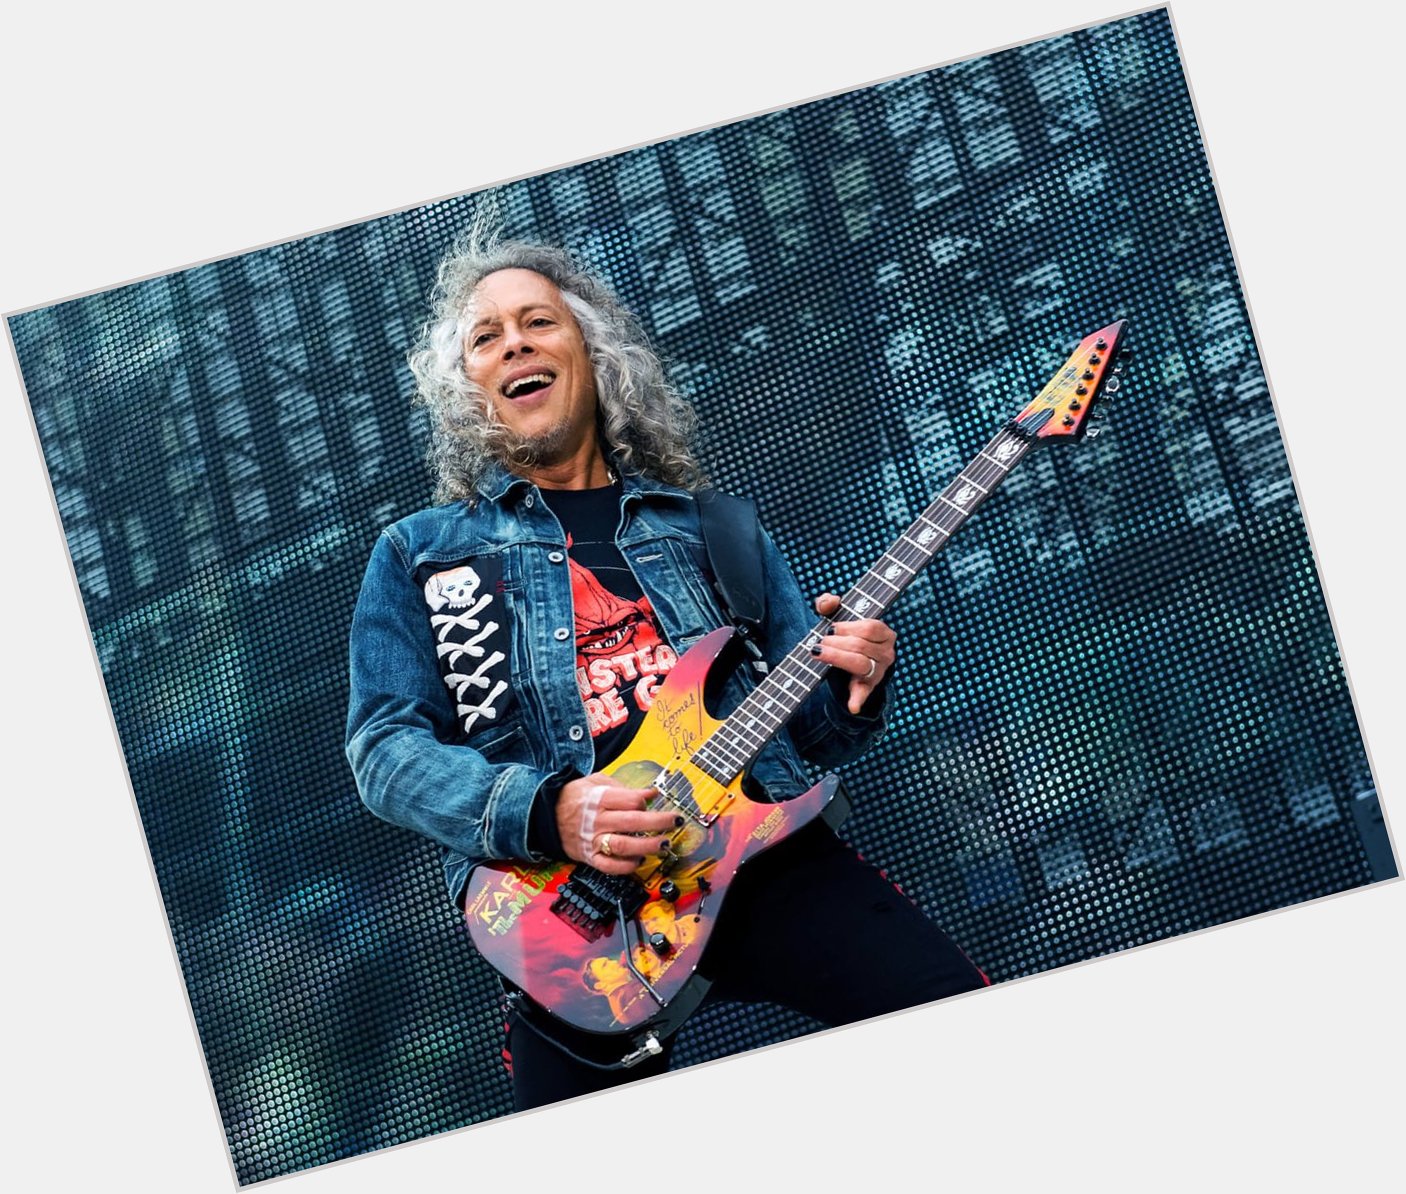 Happy 60th birthday to the Thrash master Kirk Hammett!  